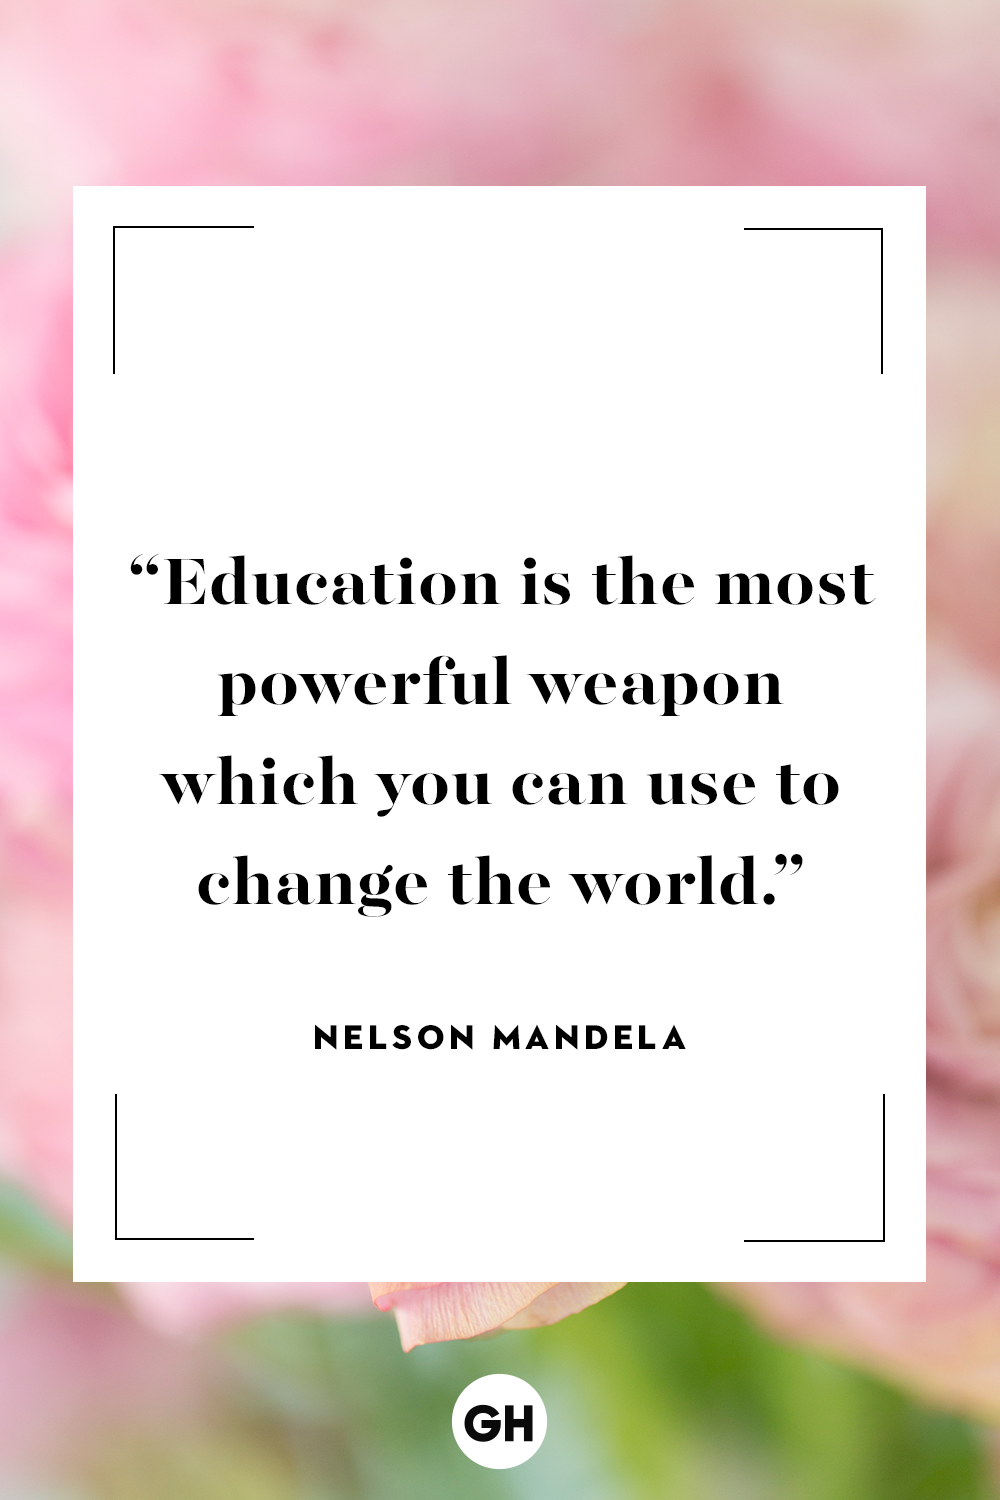 Inspirational Quote Nelson Mandela 1665766696 